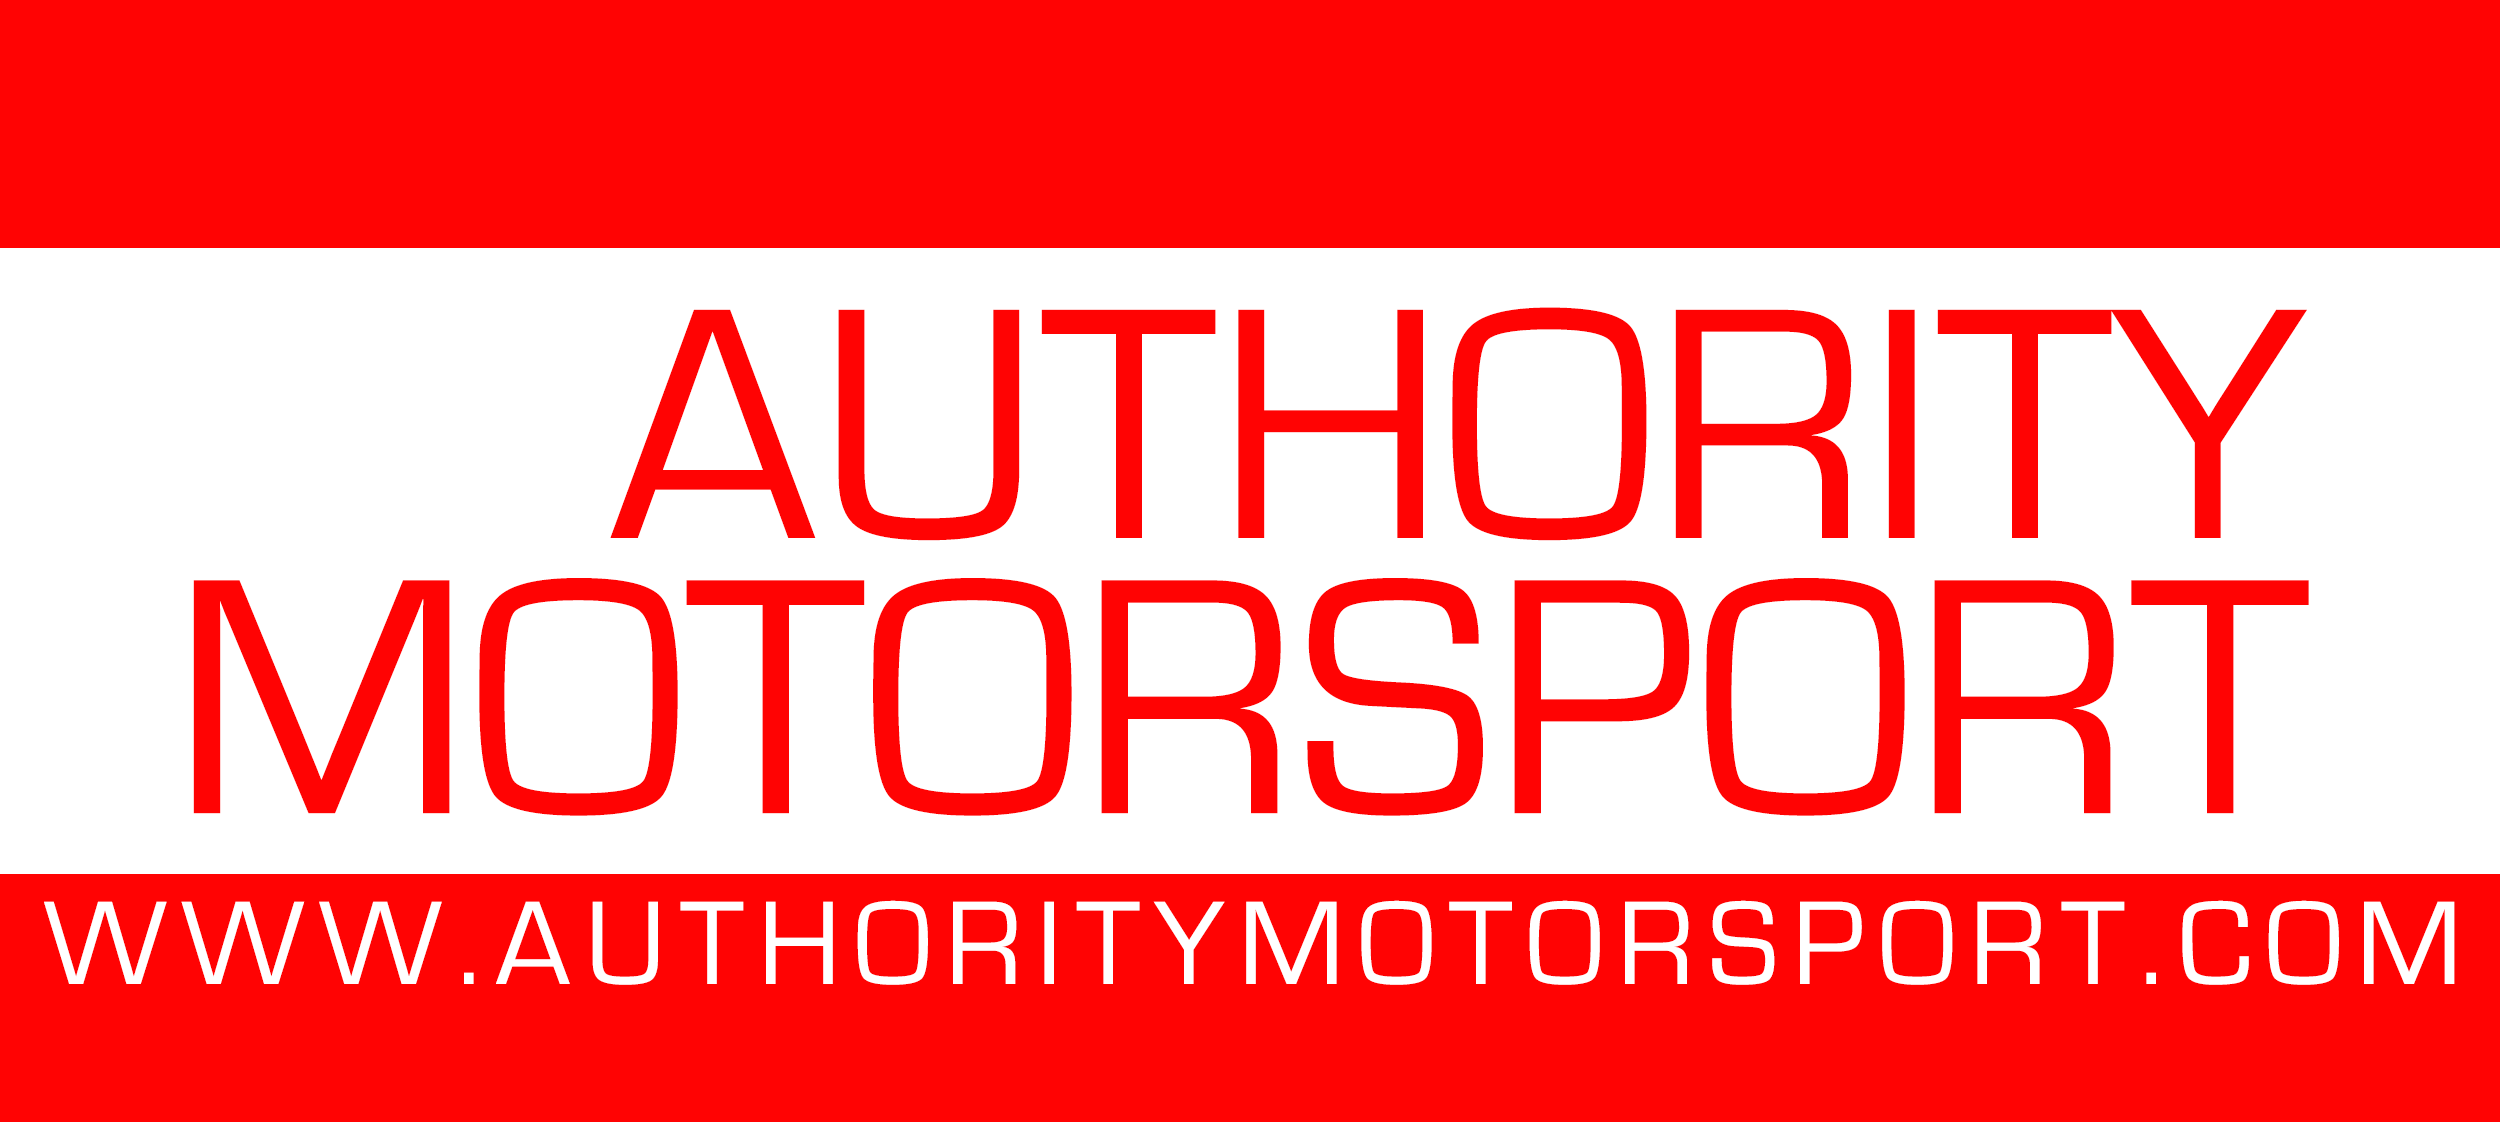 Authority Motorsport